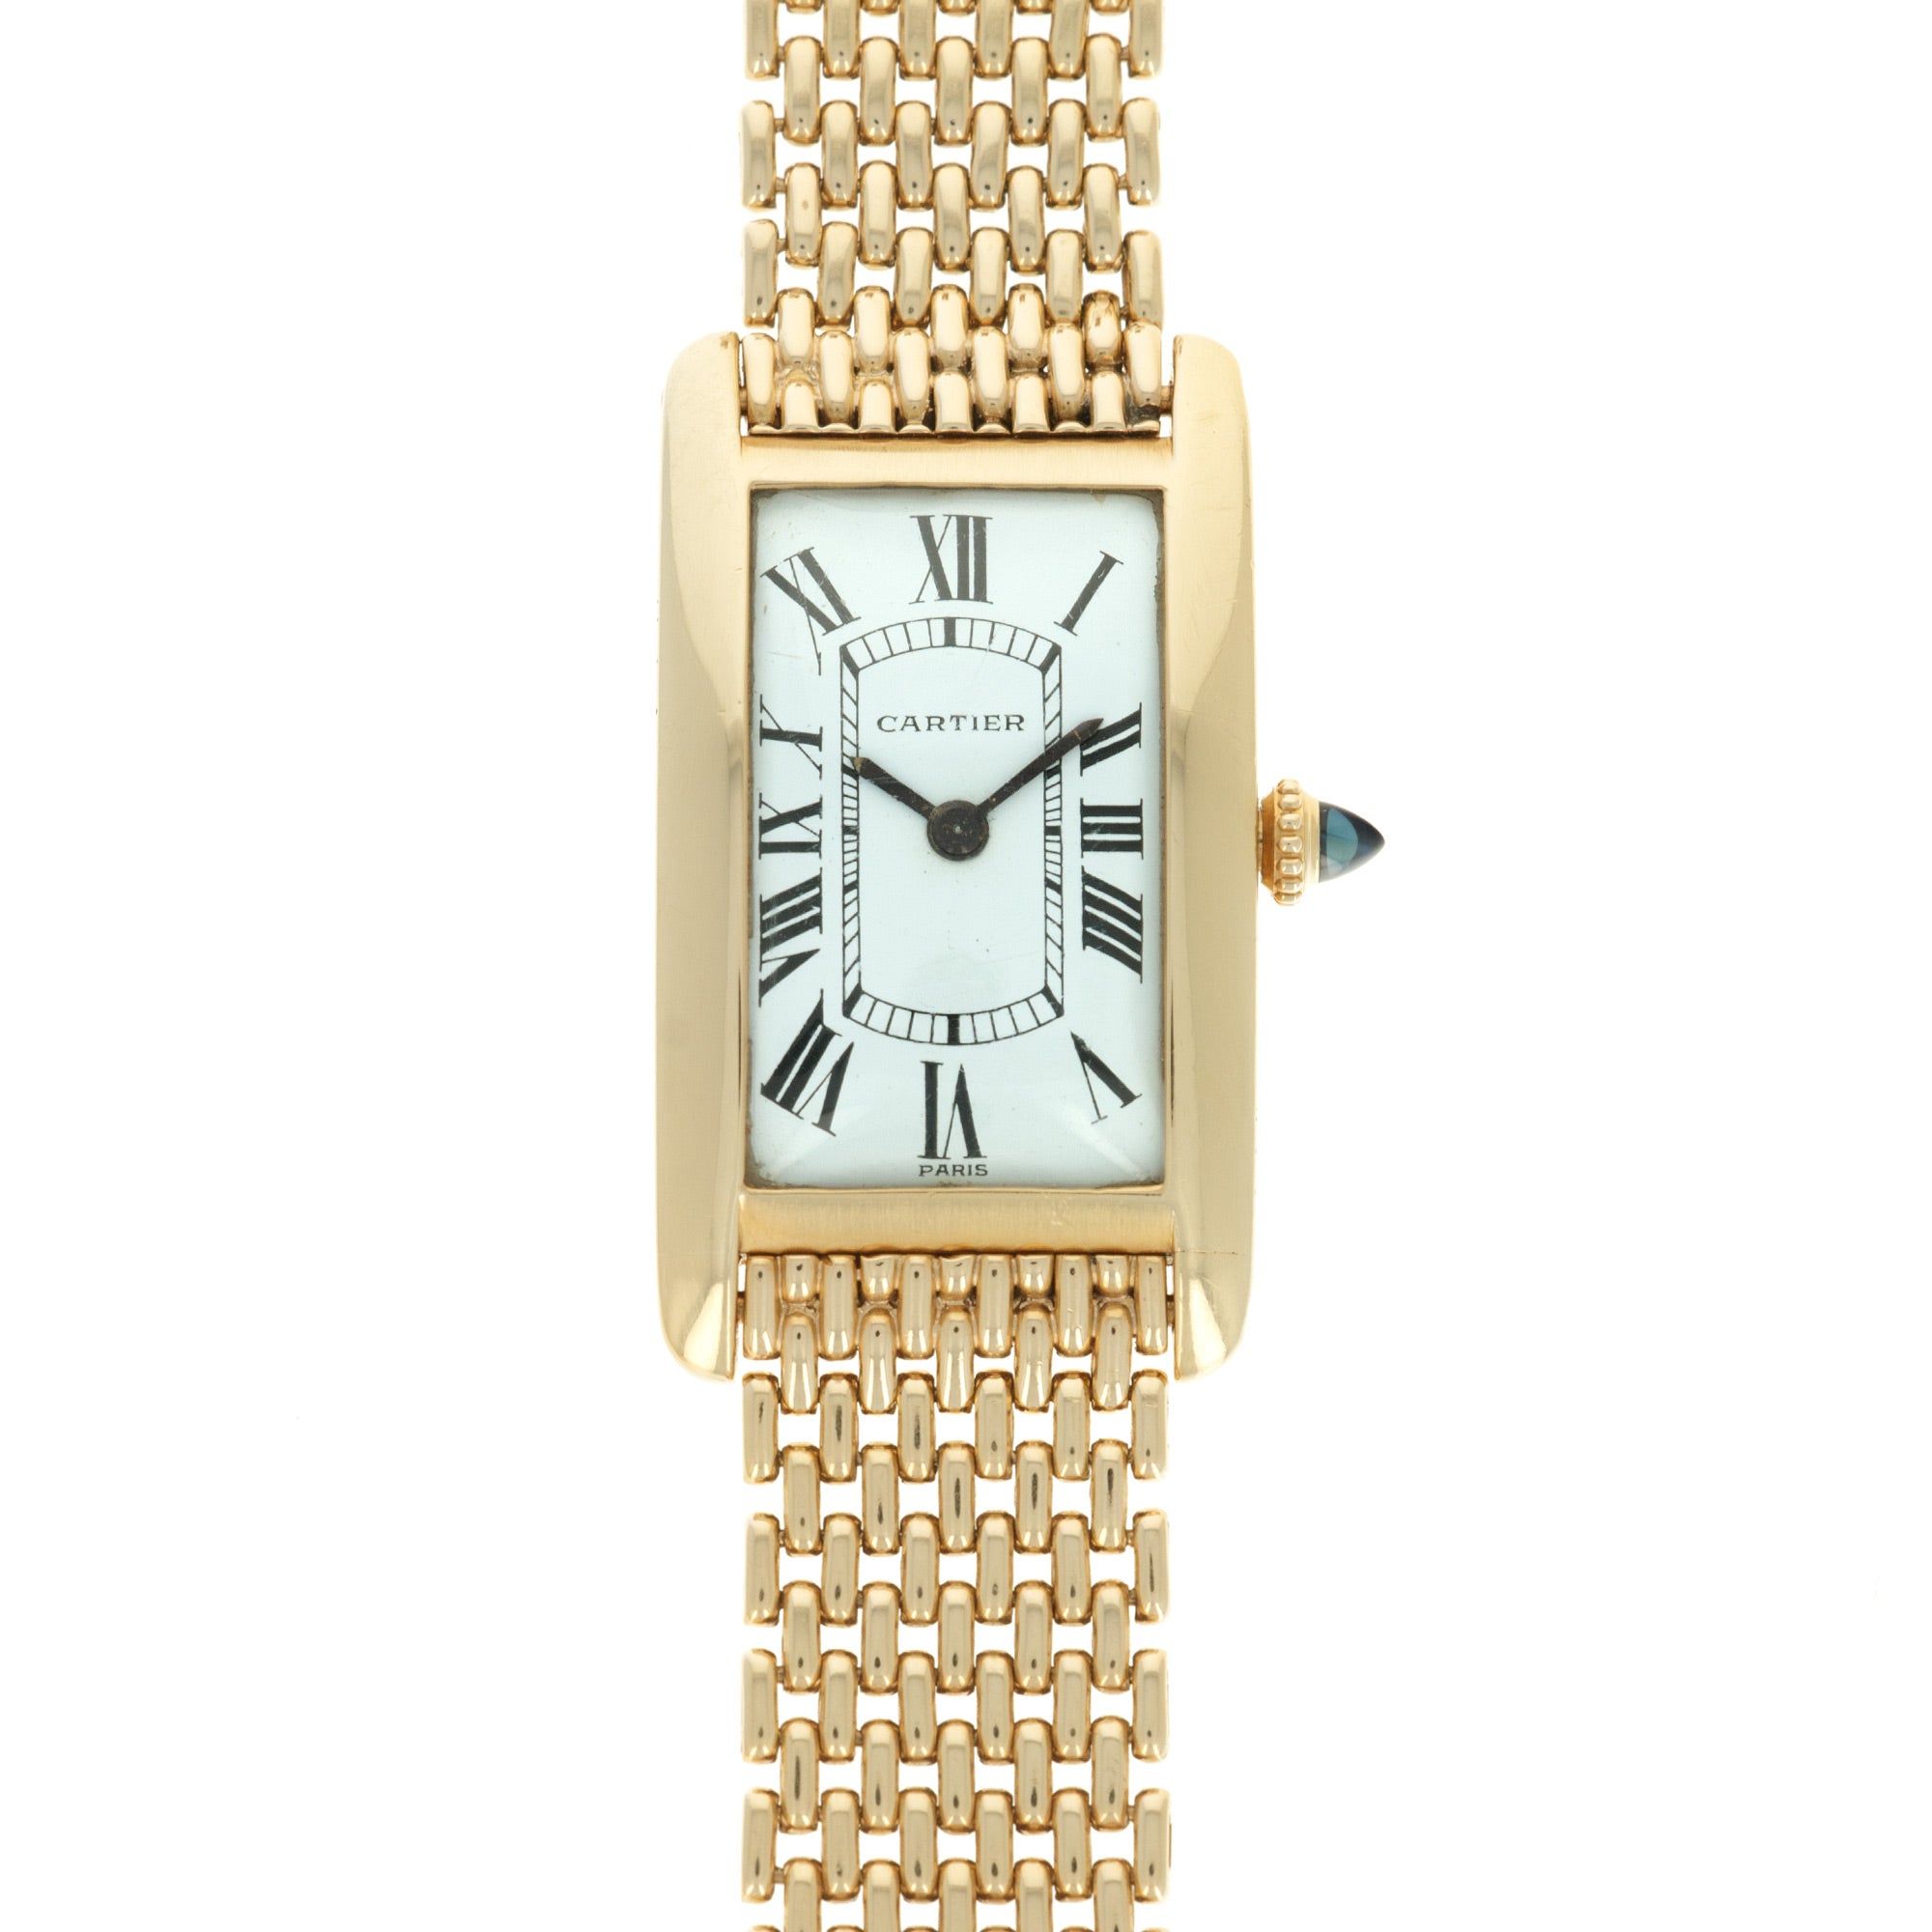 Cartier - Cartier Yellow Gold Tank Cintree Watch, 1930s - The Keystone Watches